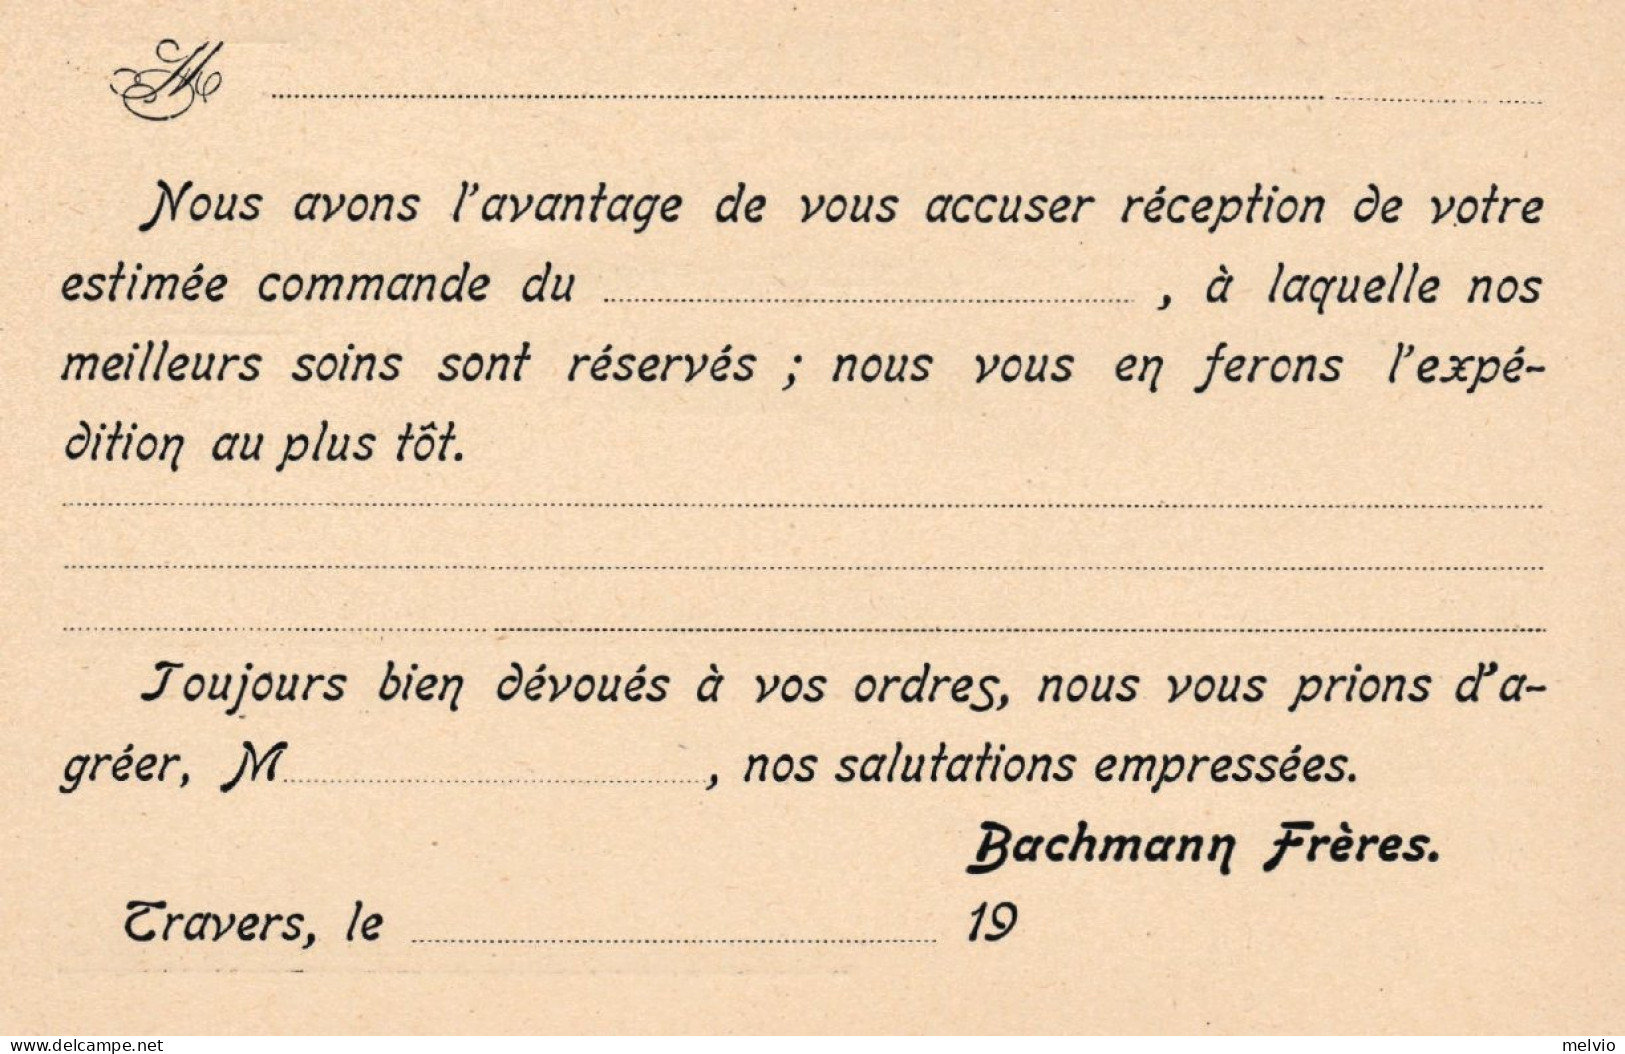 1900circa-Svizzera Travers Intero Postale A Stampa Fabrique De Meubles Bachmann  - Poststempel